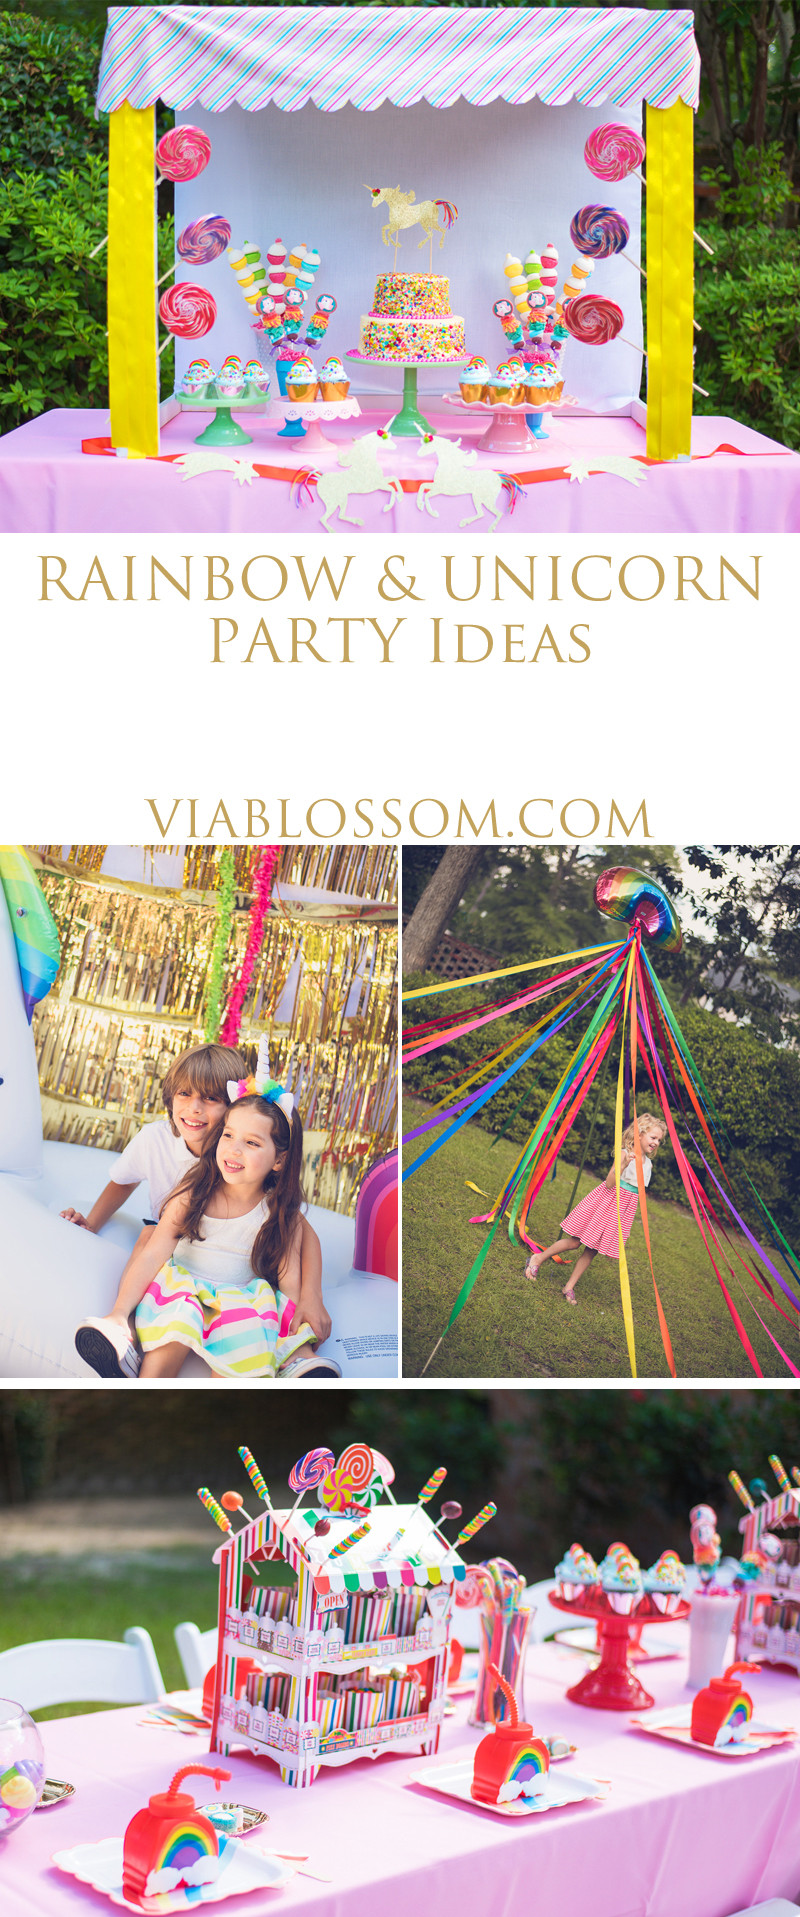 Rainbow Unicorn Party Ideas
 Rainbow and Unicorn Birthday Party Via Blossom